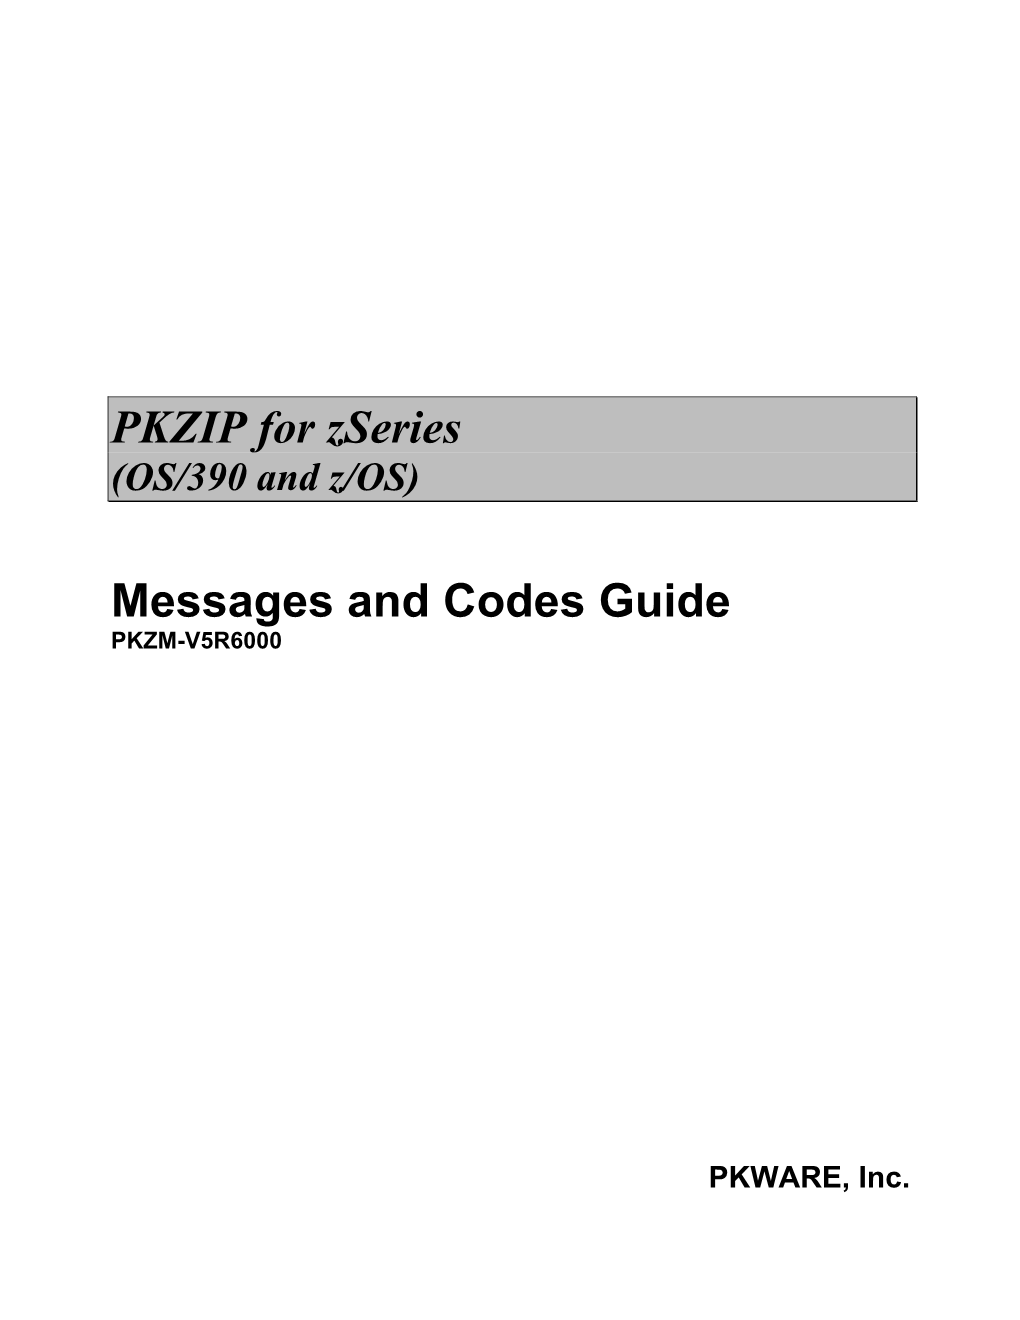 MVS/VSE Messages Guide